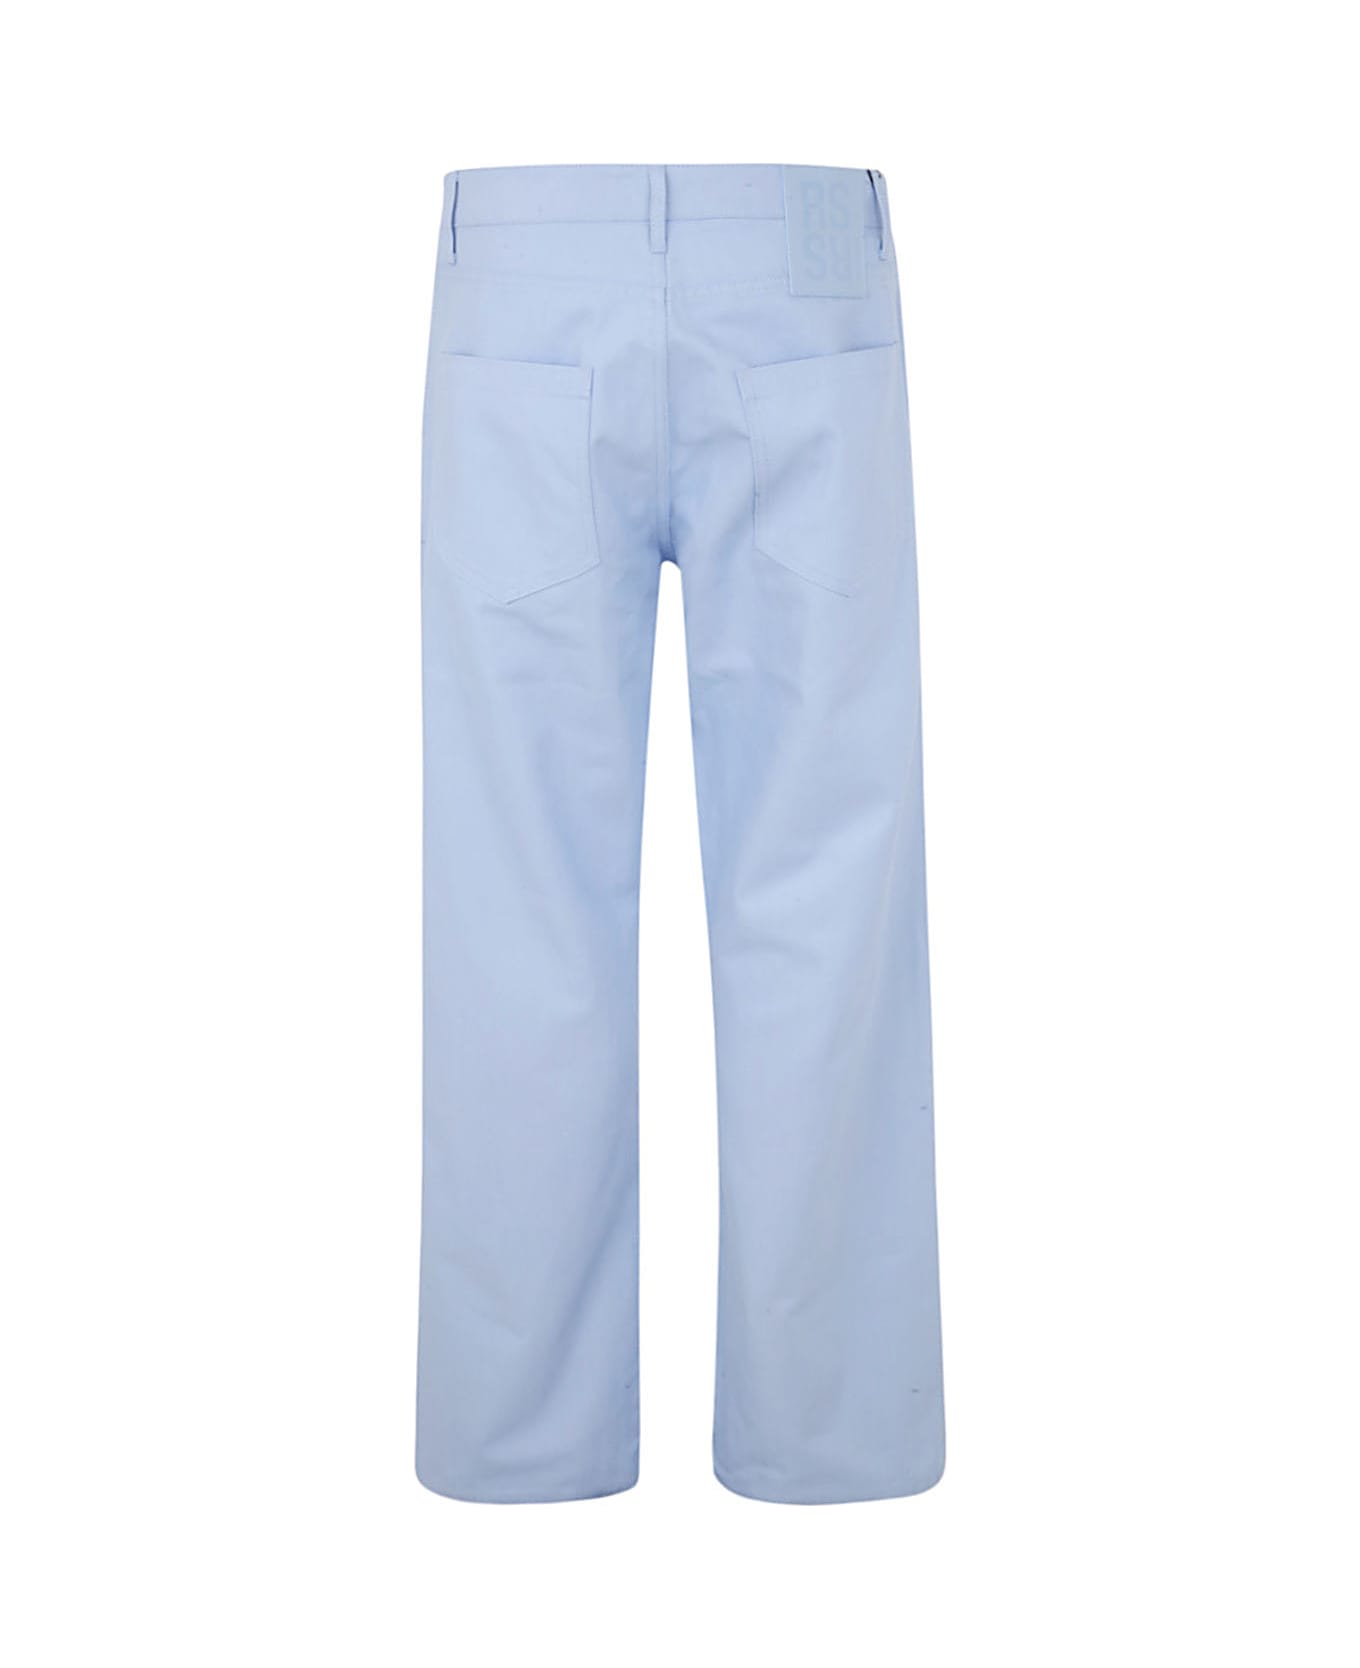 Raf Simons Workwear Jeans - Light Blue